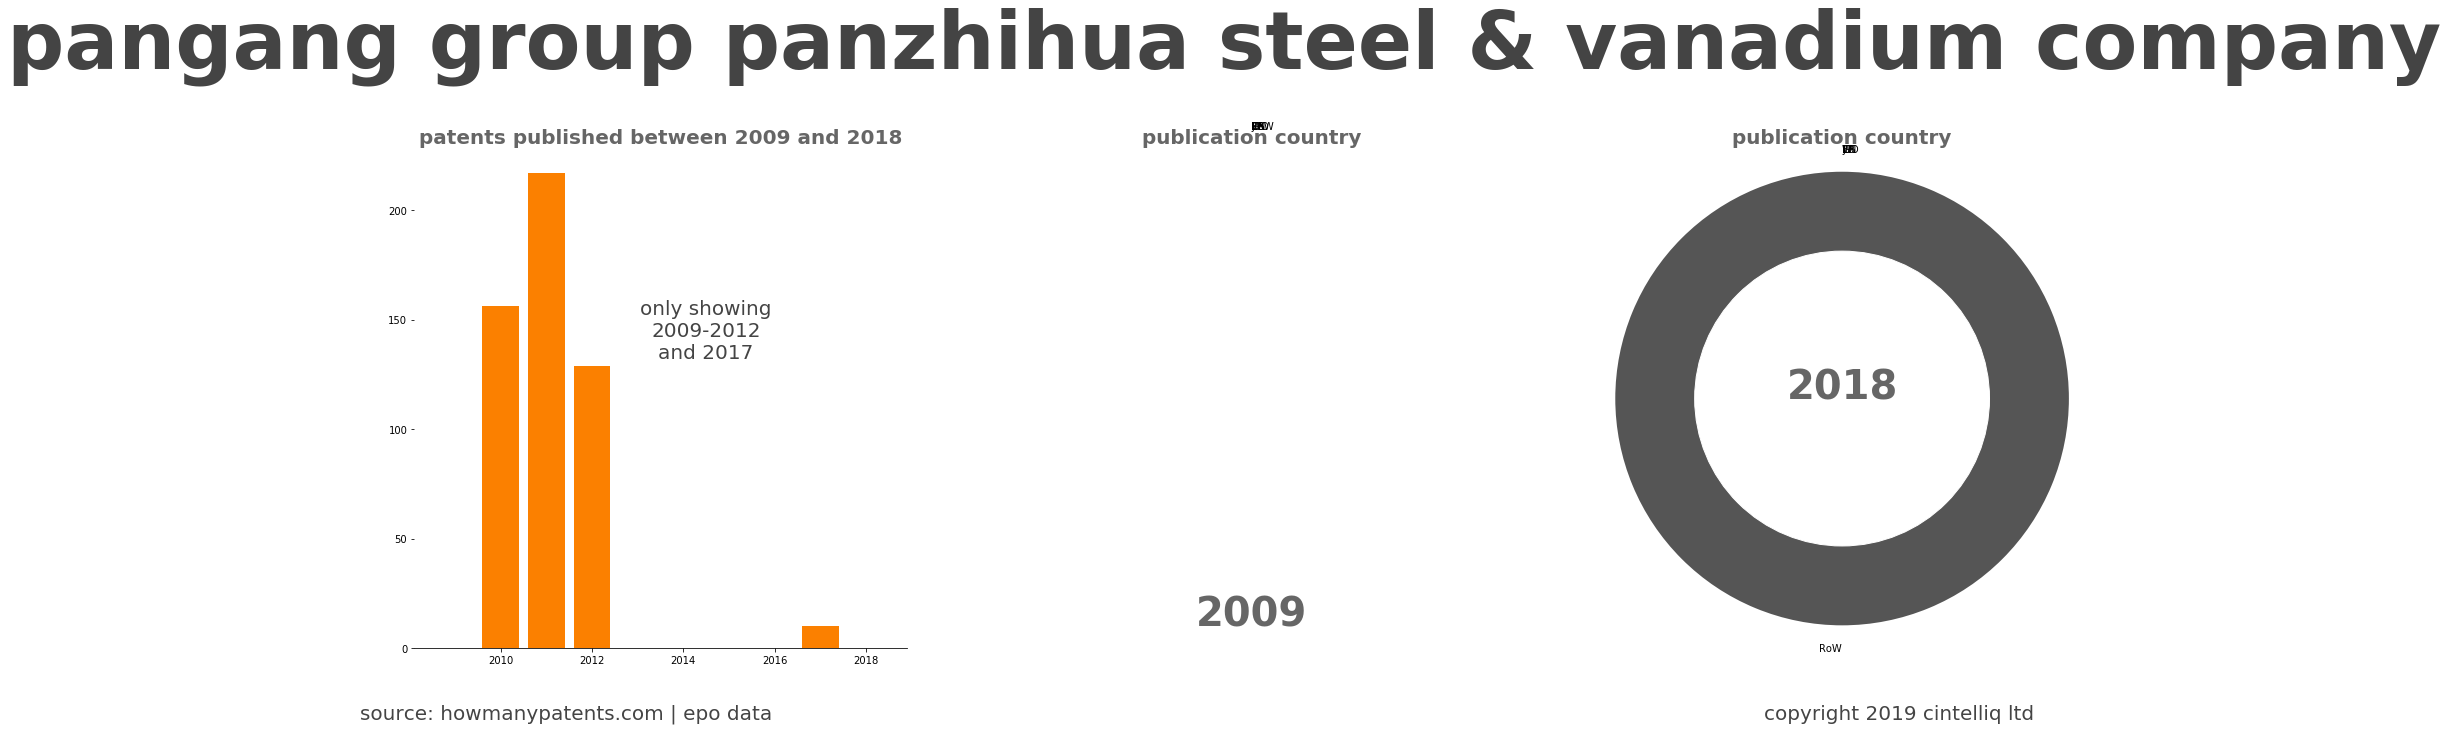 summary of patents for Pangang Group Panzhihua Steel & Vanadium Company